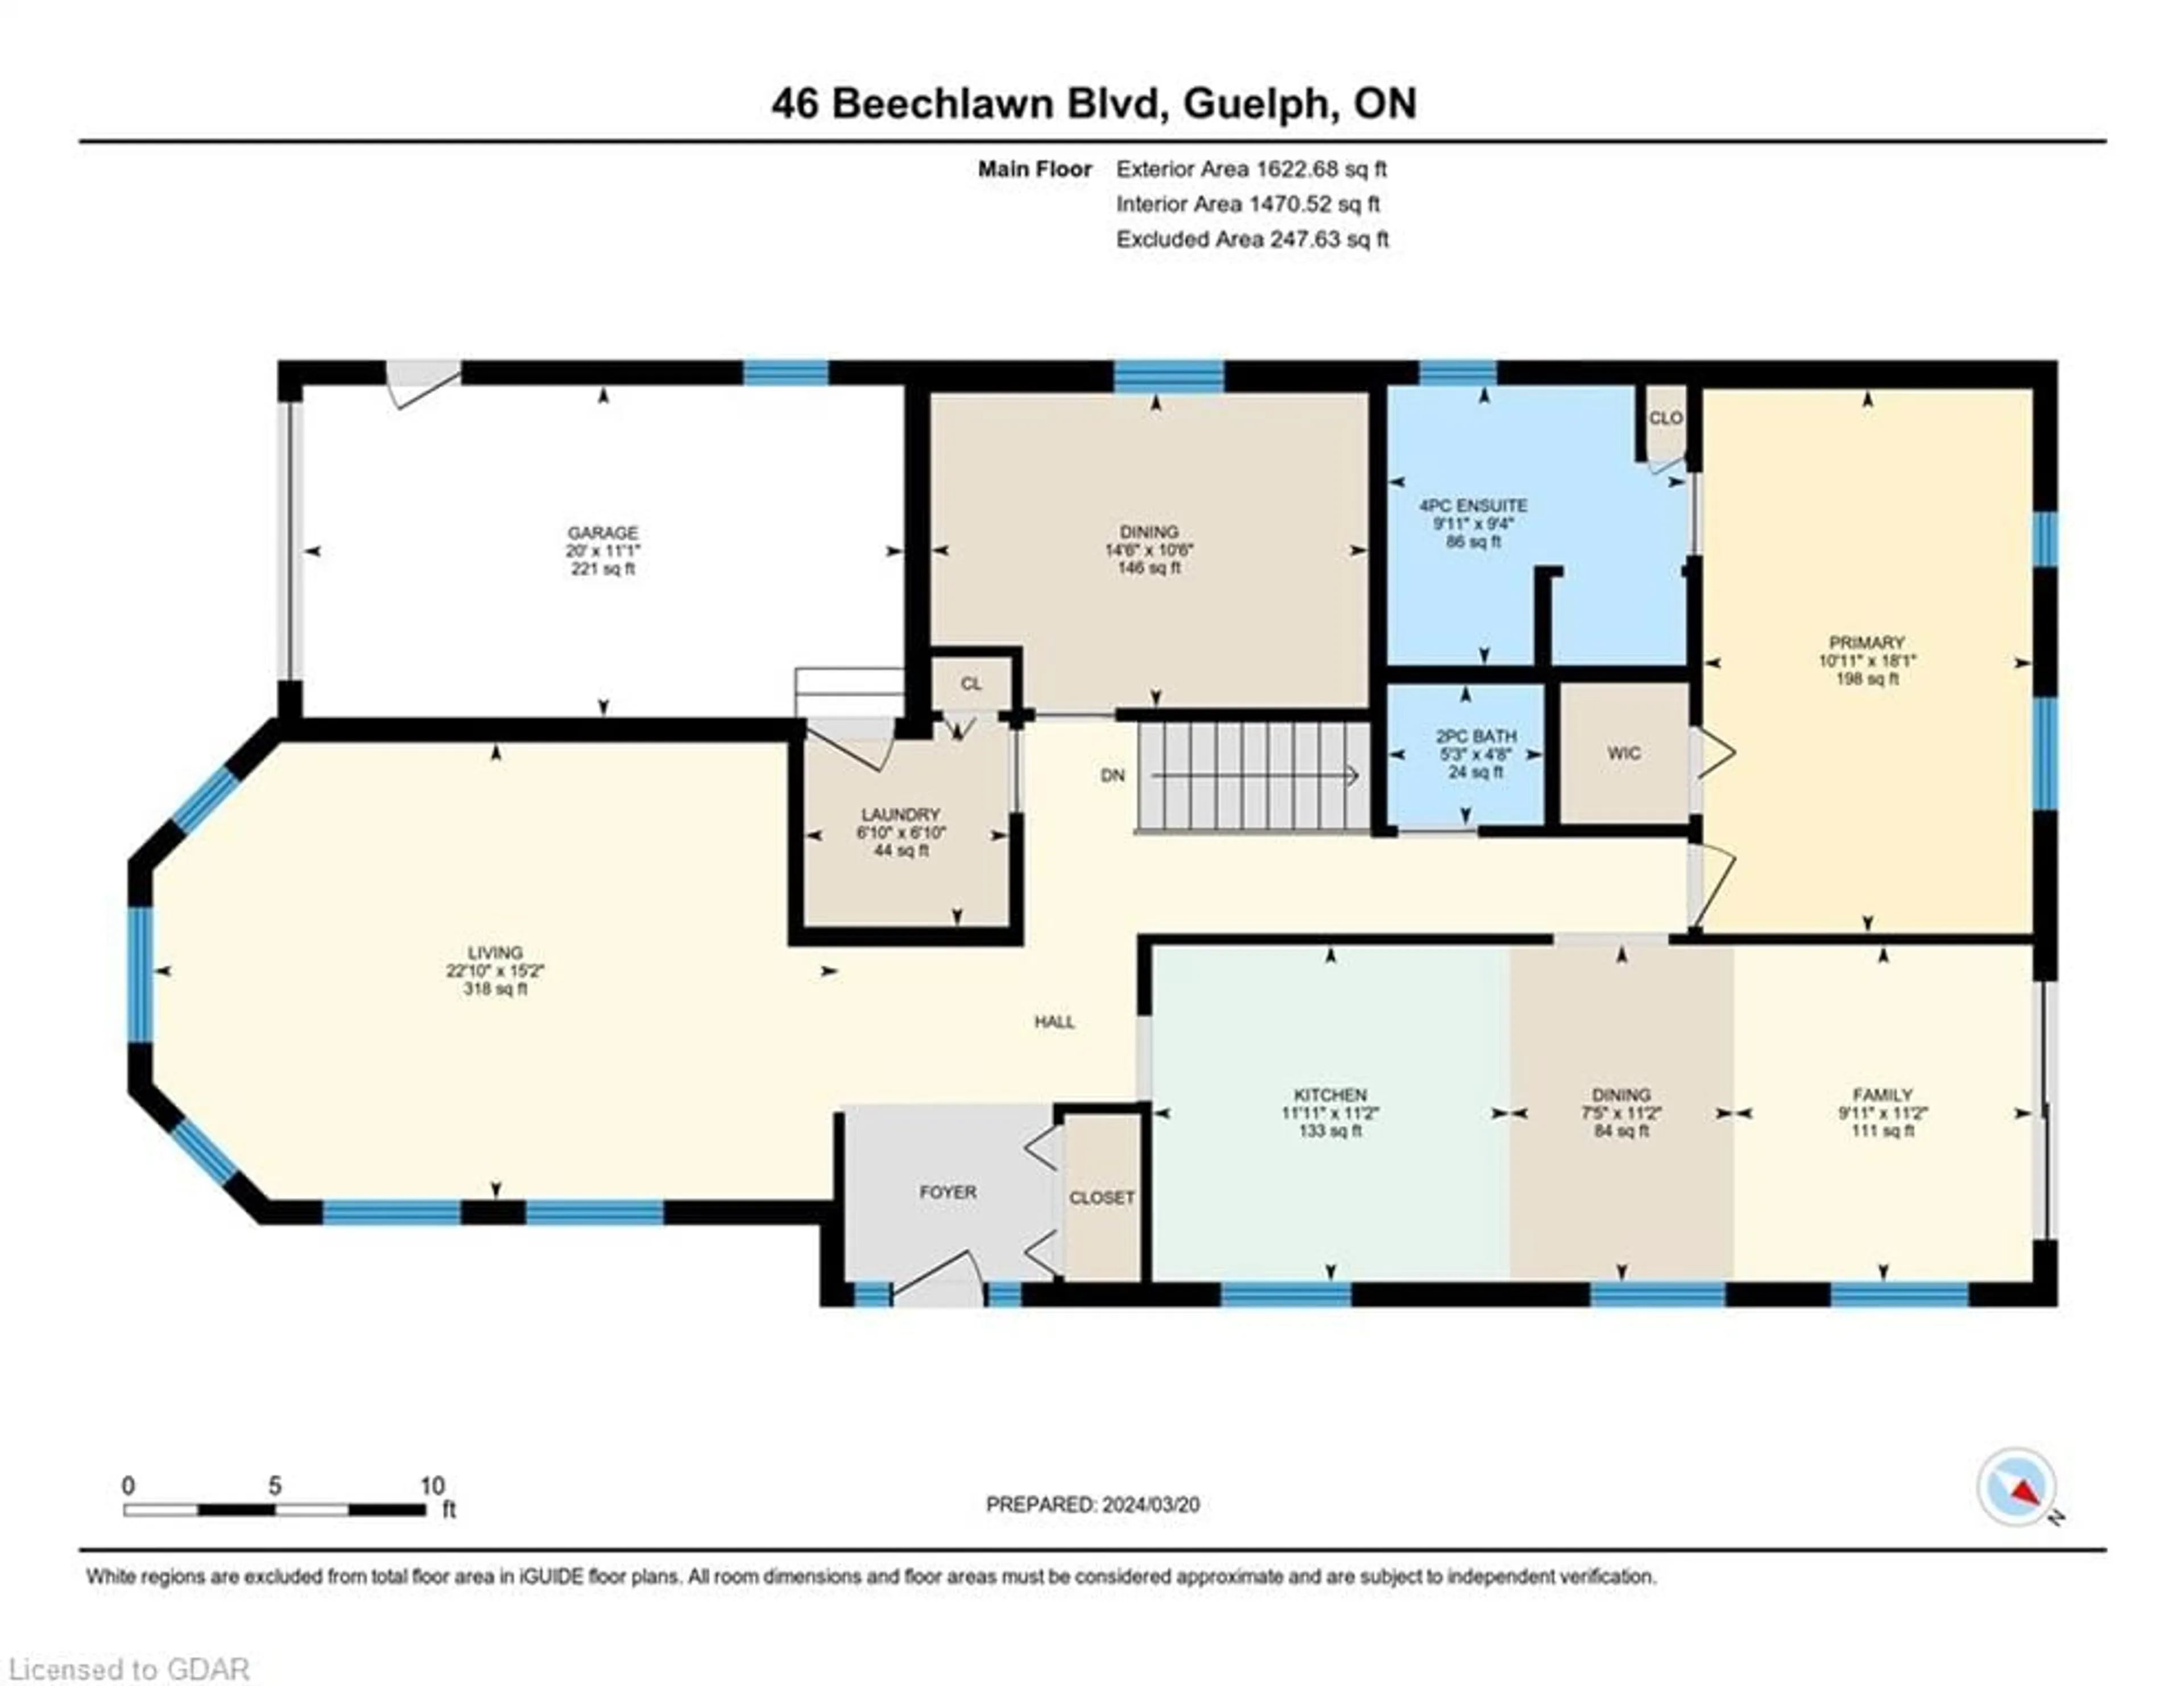 Floor plan for 46 Beechlawn Blvd, Guelph Ontario N1G 4X7